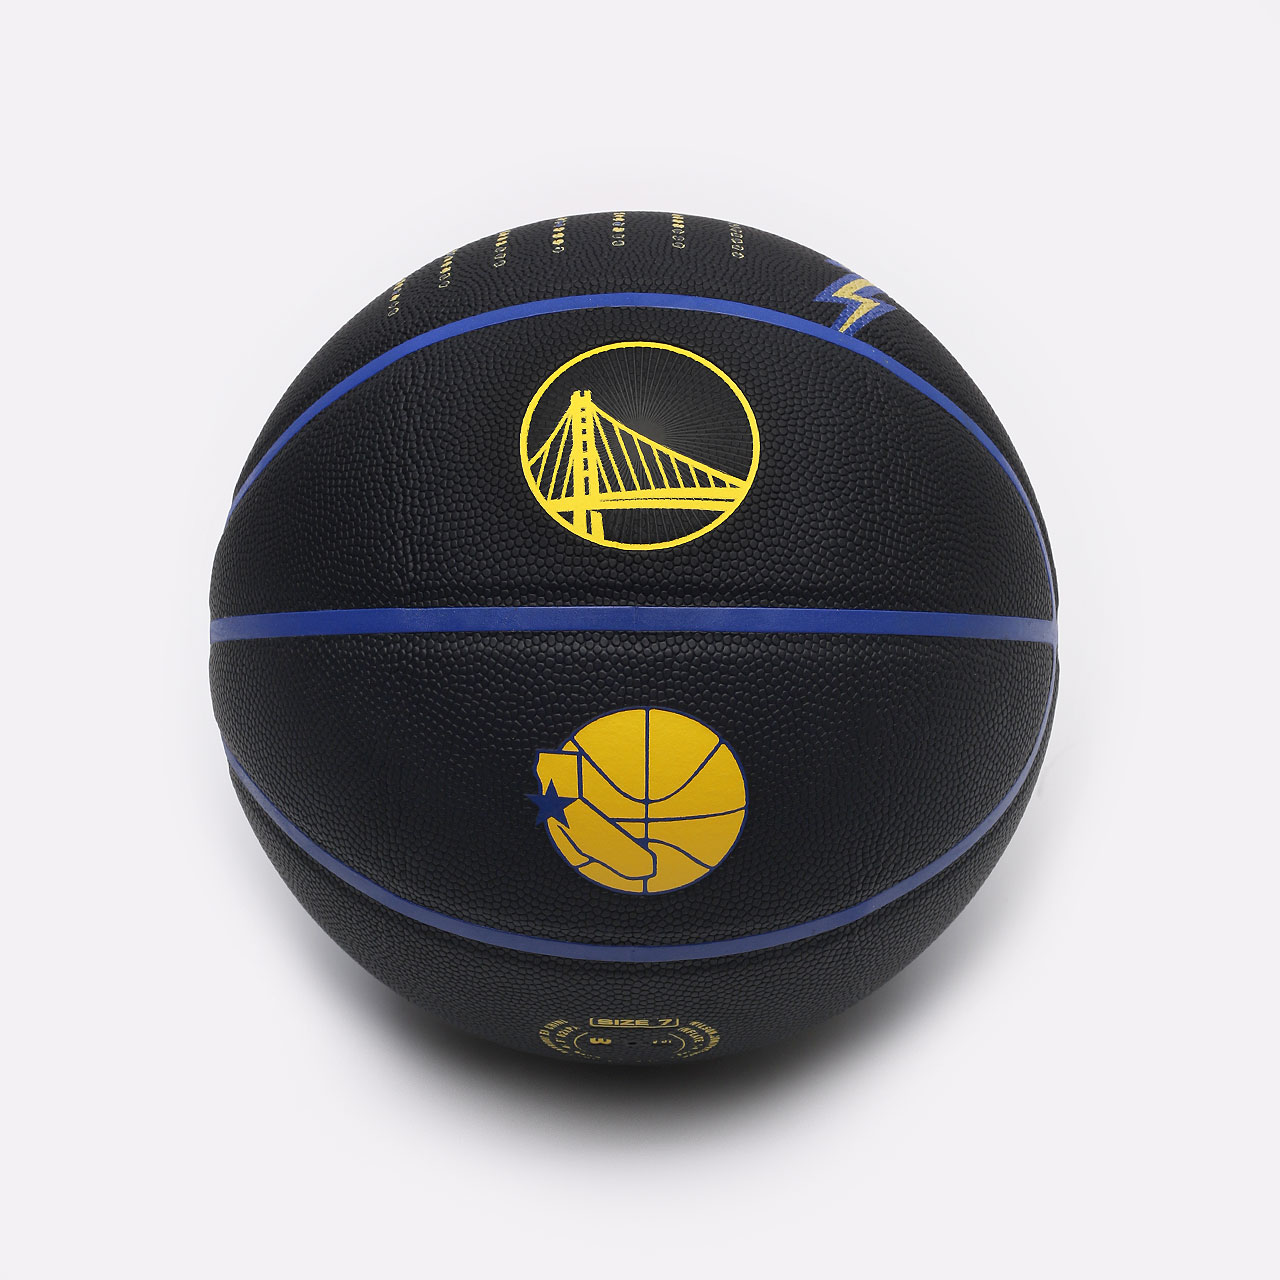   мяч №7 Wilson Golden State Warriors Collector City Edition WZ4003910XB7 - цена, описание, фото 1